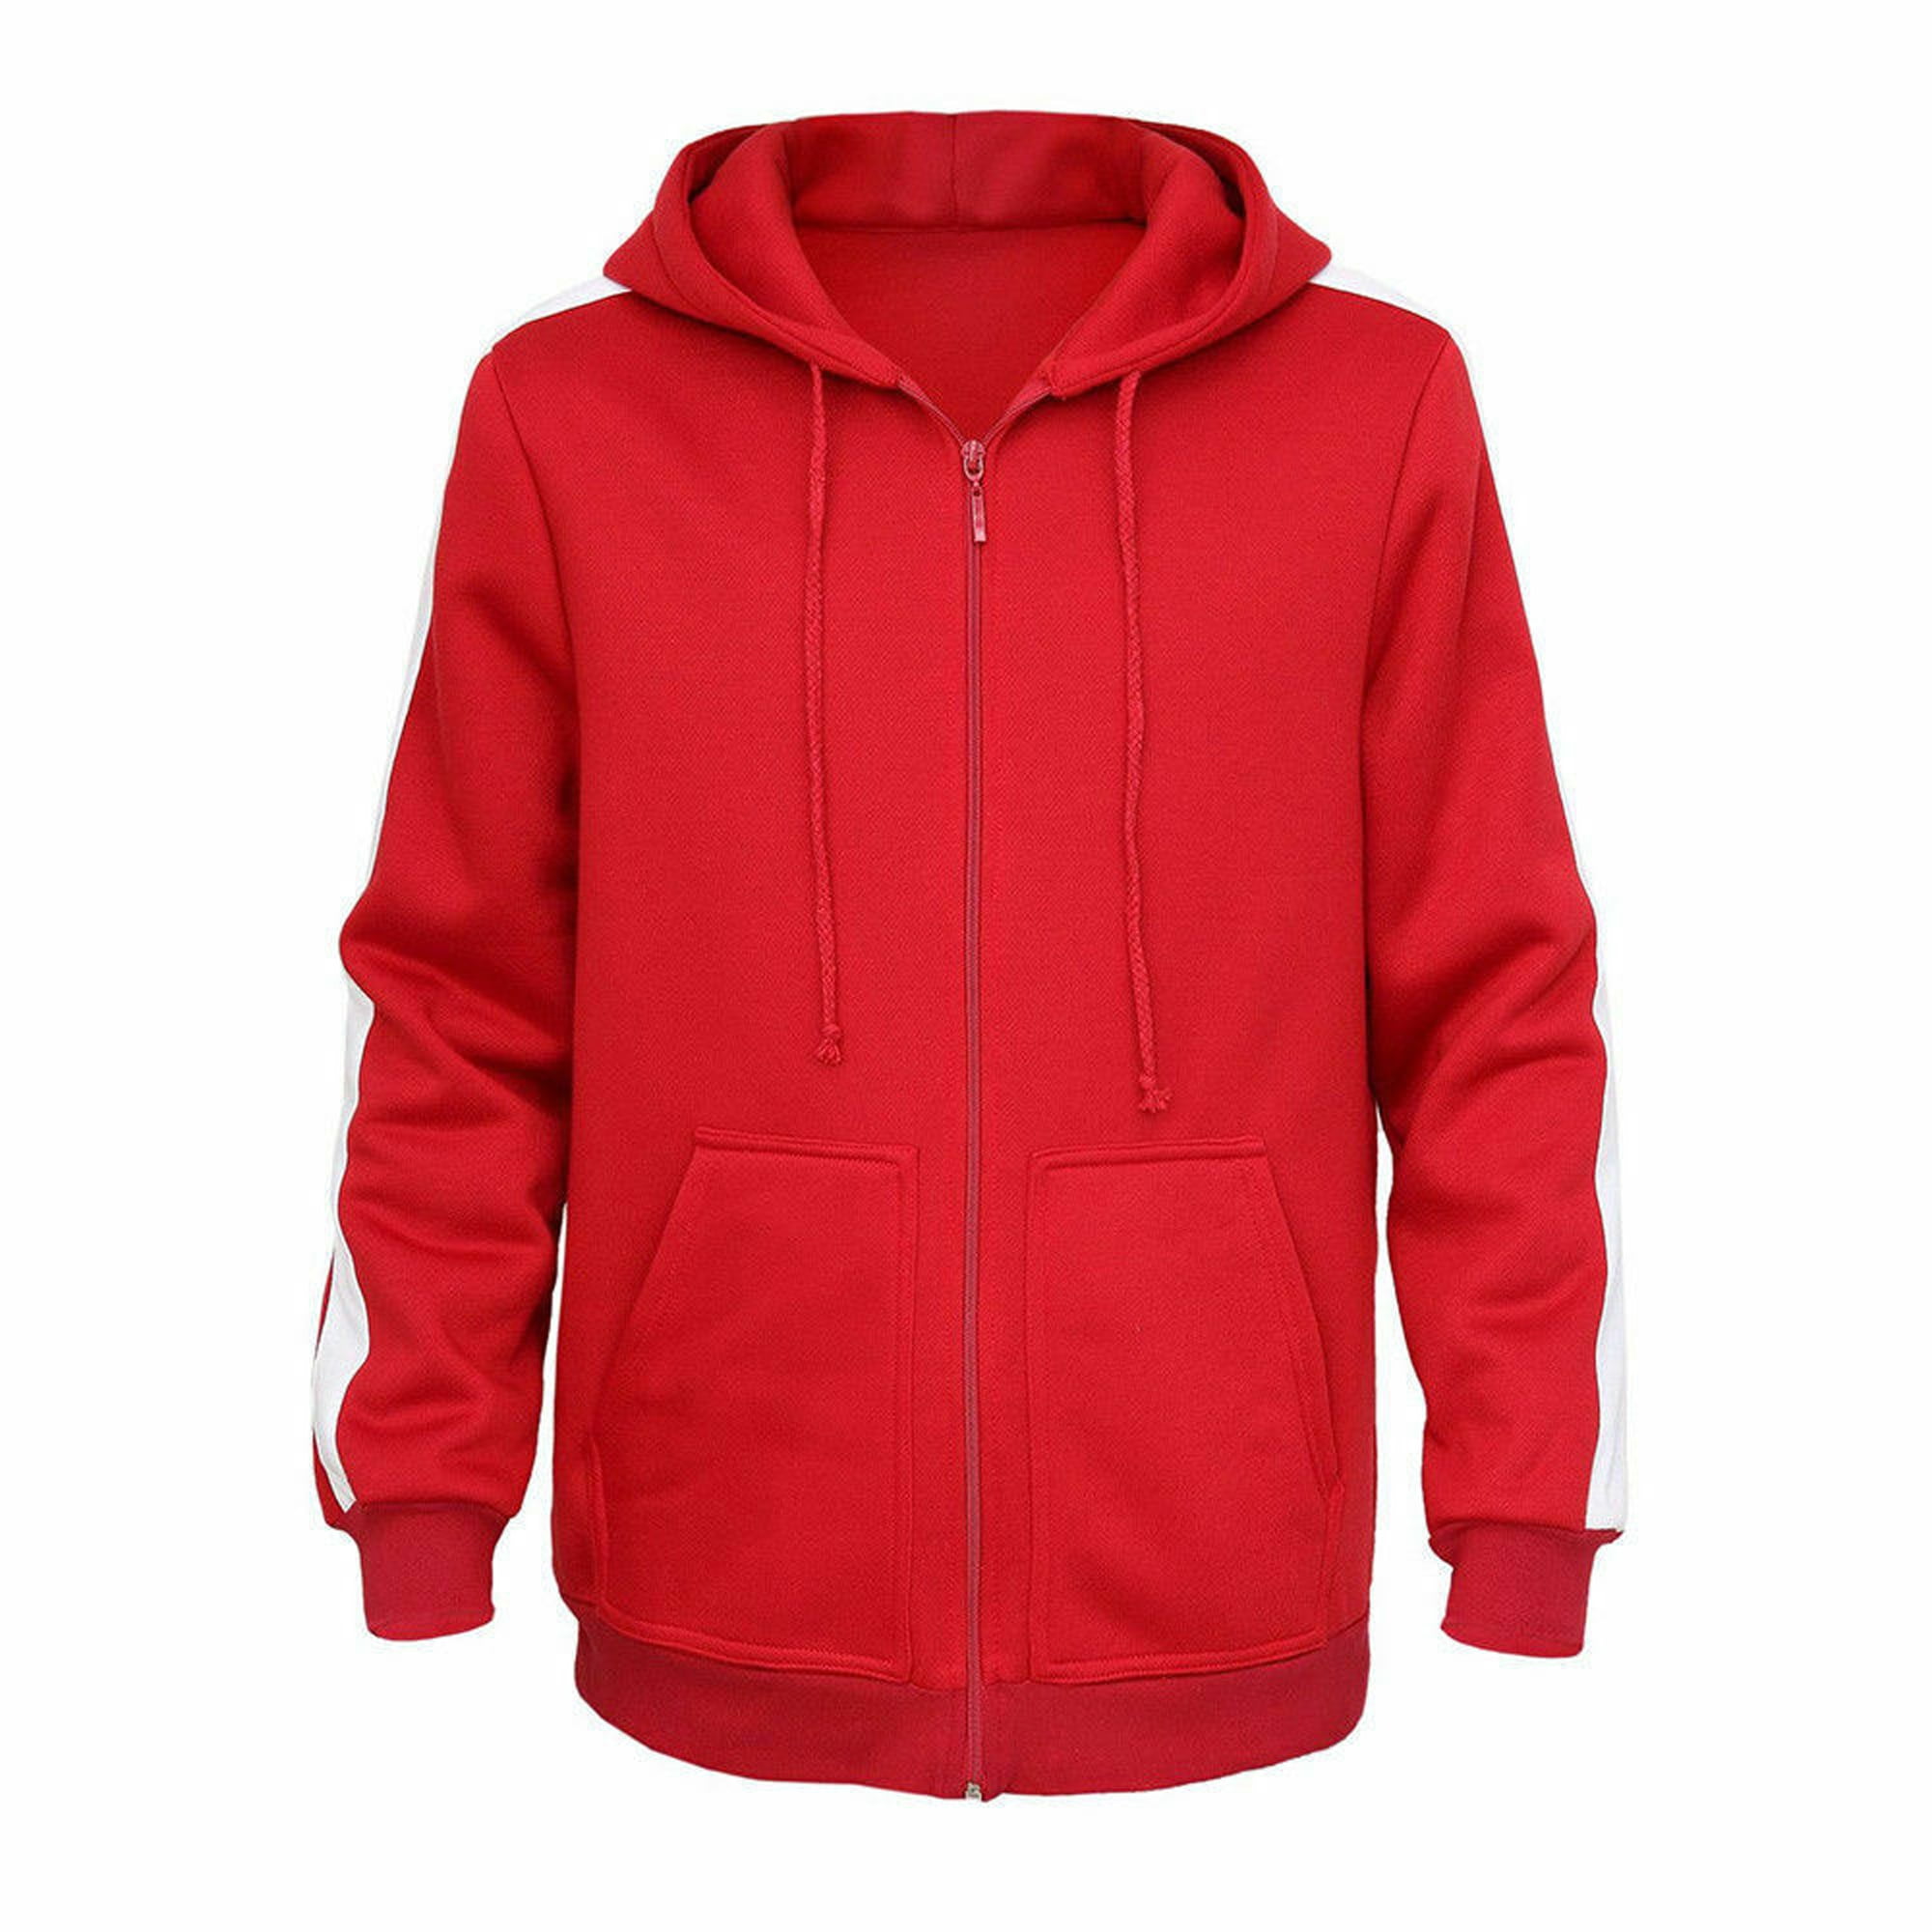 Coco Miguel Red Coat Jacket Kids Zipper Full Head Cosplay Hoodie Sweatshirt Gift